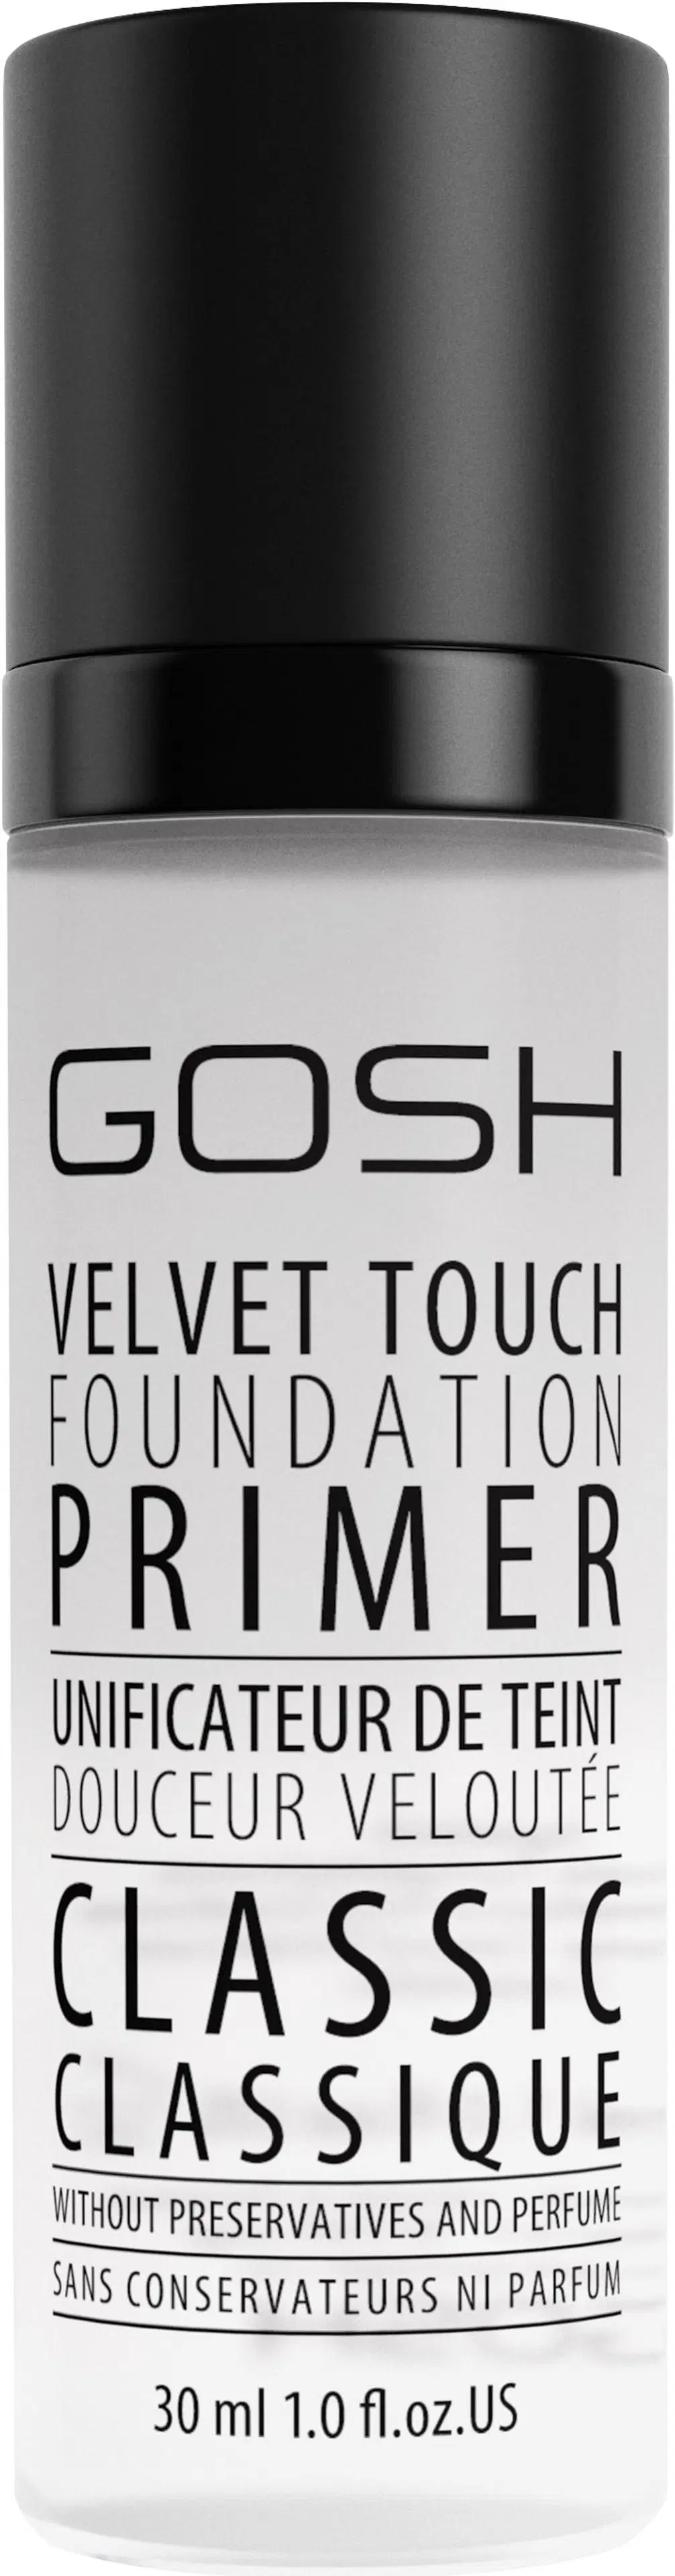 Gosh Velvet Touch Foundation Primer Classic meikinpohjustaja 30ml